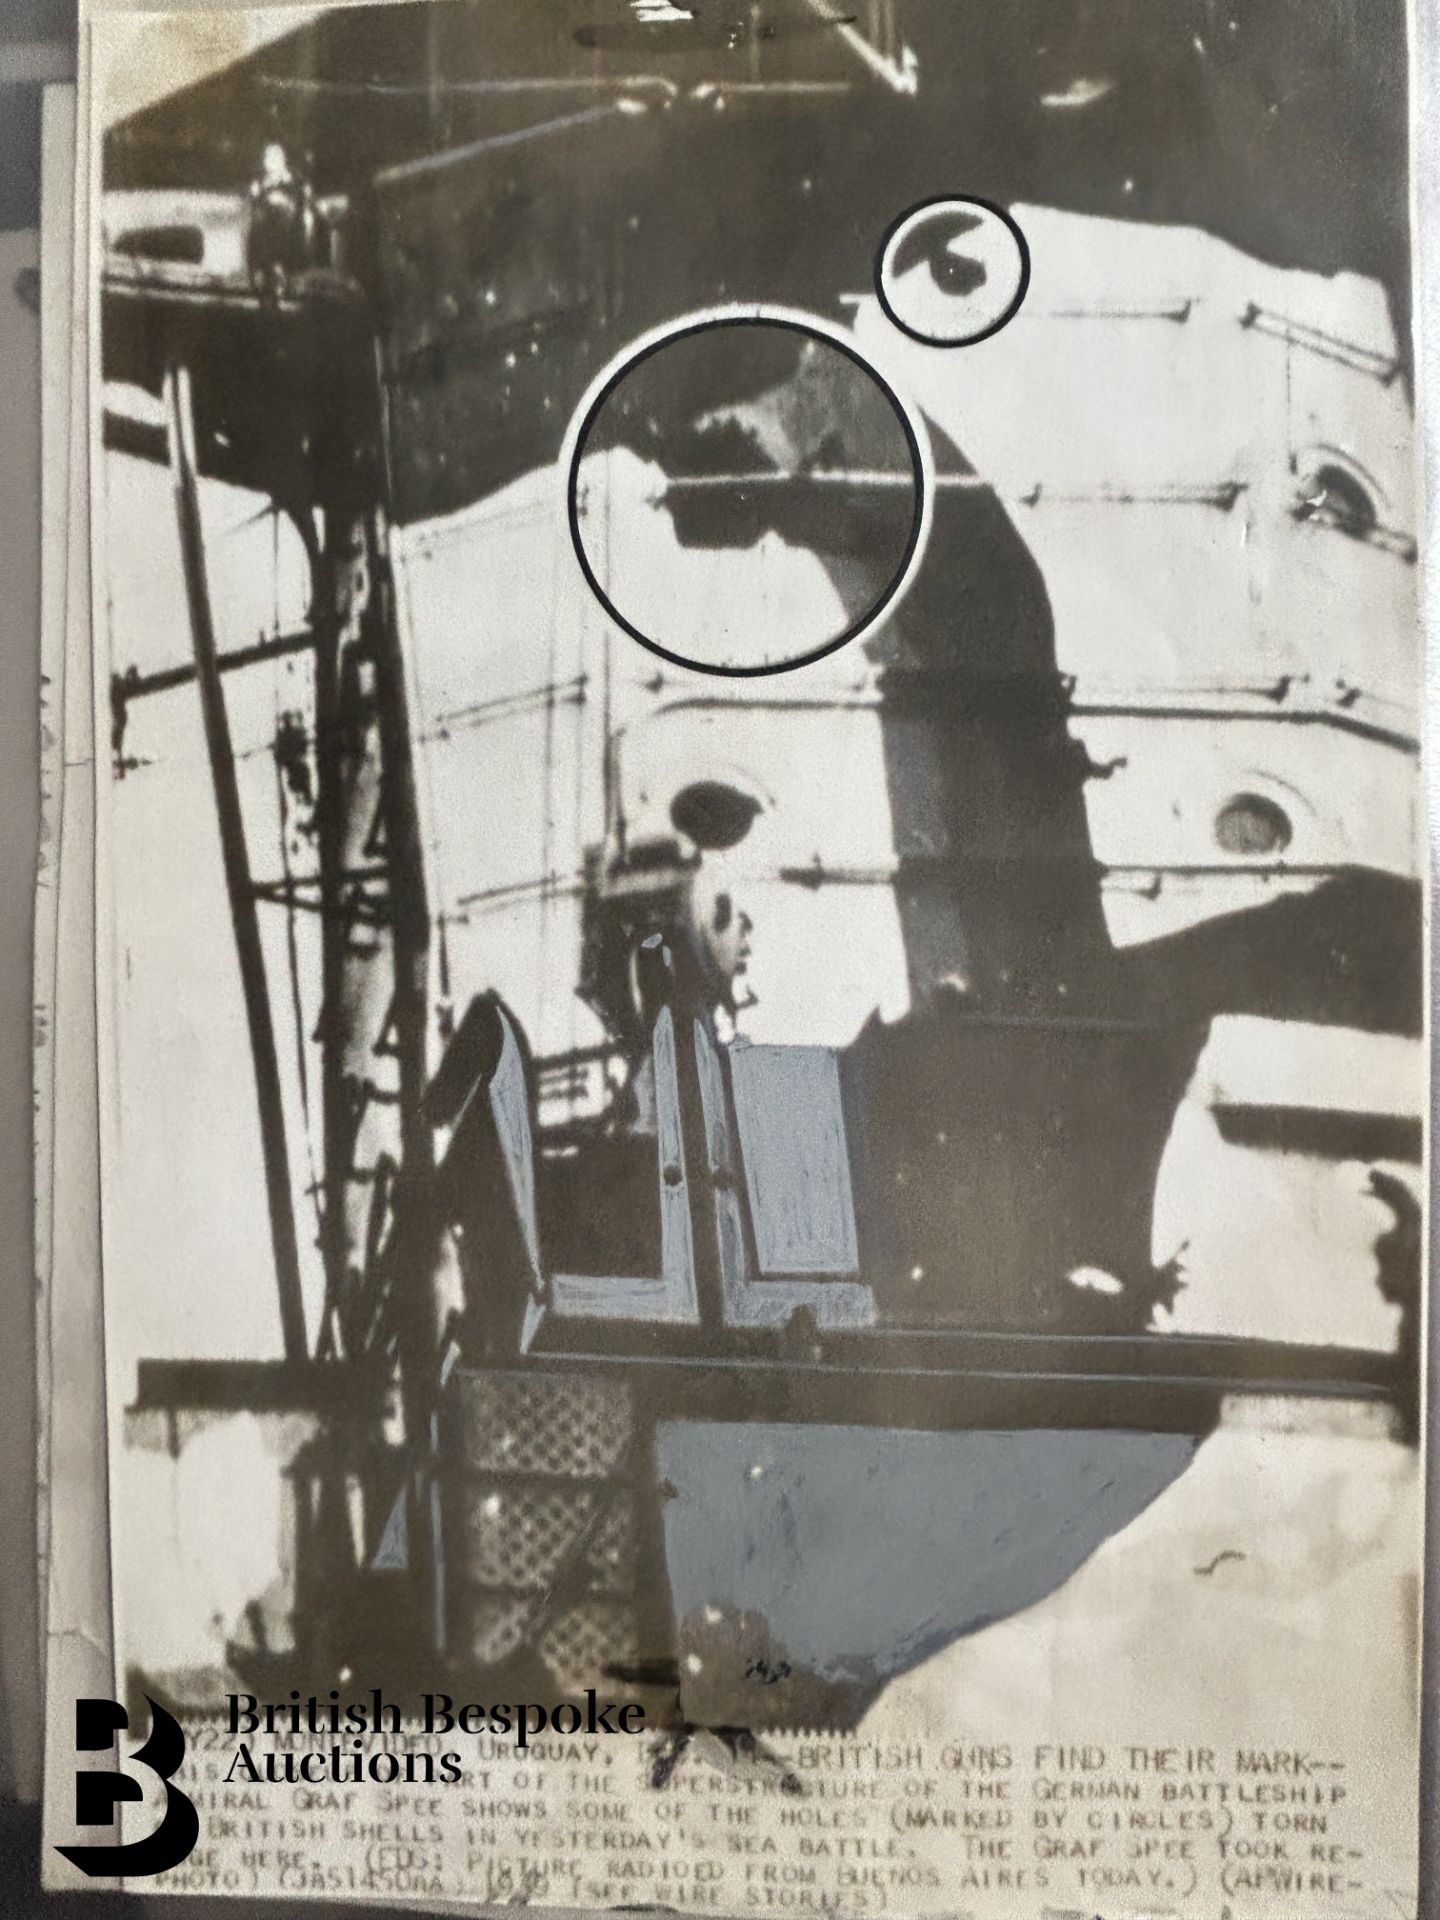 Graf Spee (Pocket Battleship) Interest, incl. Photographs, Documents, Miscellanea - Image 114 of 126